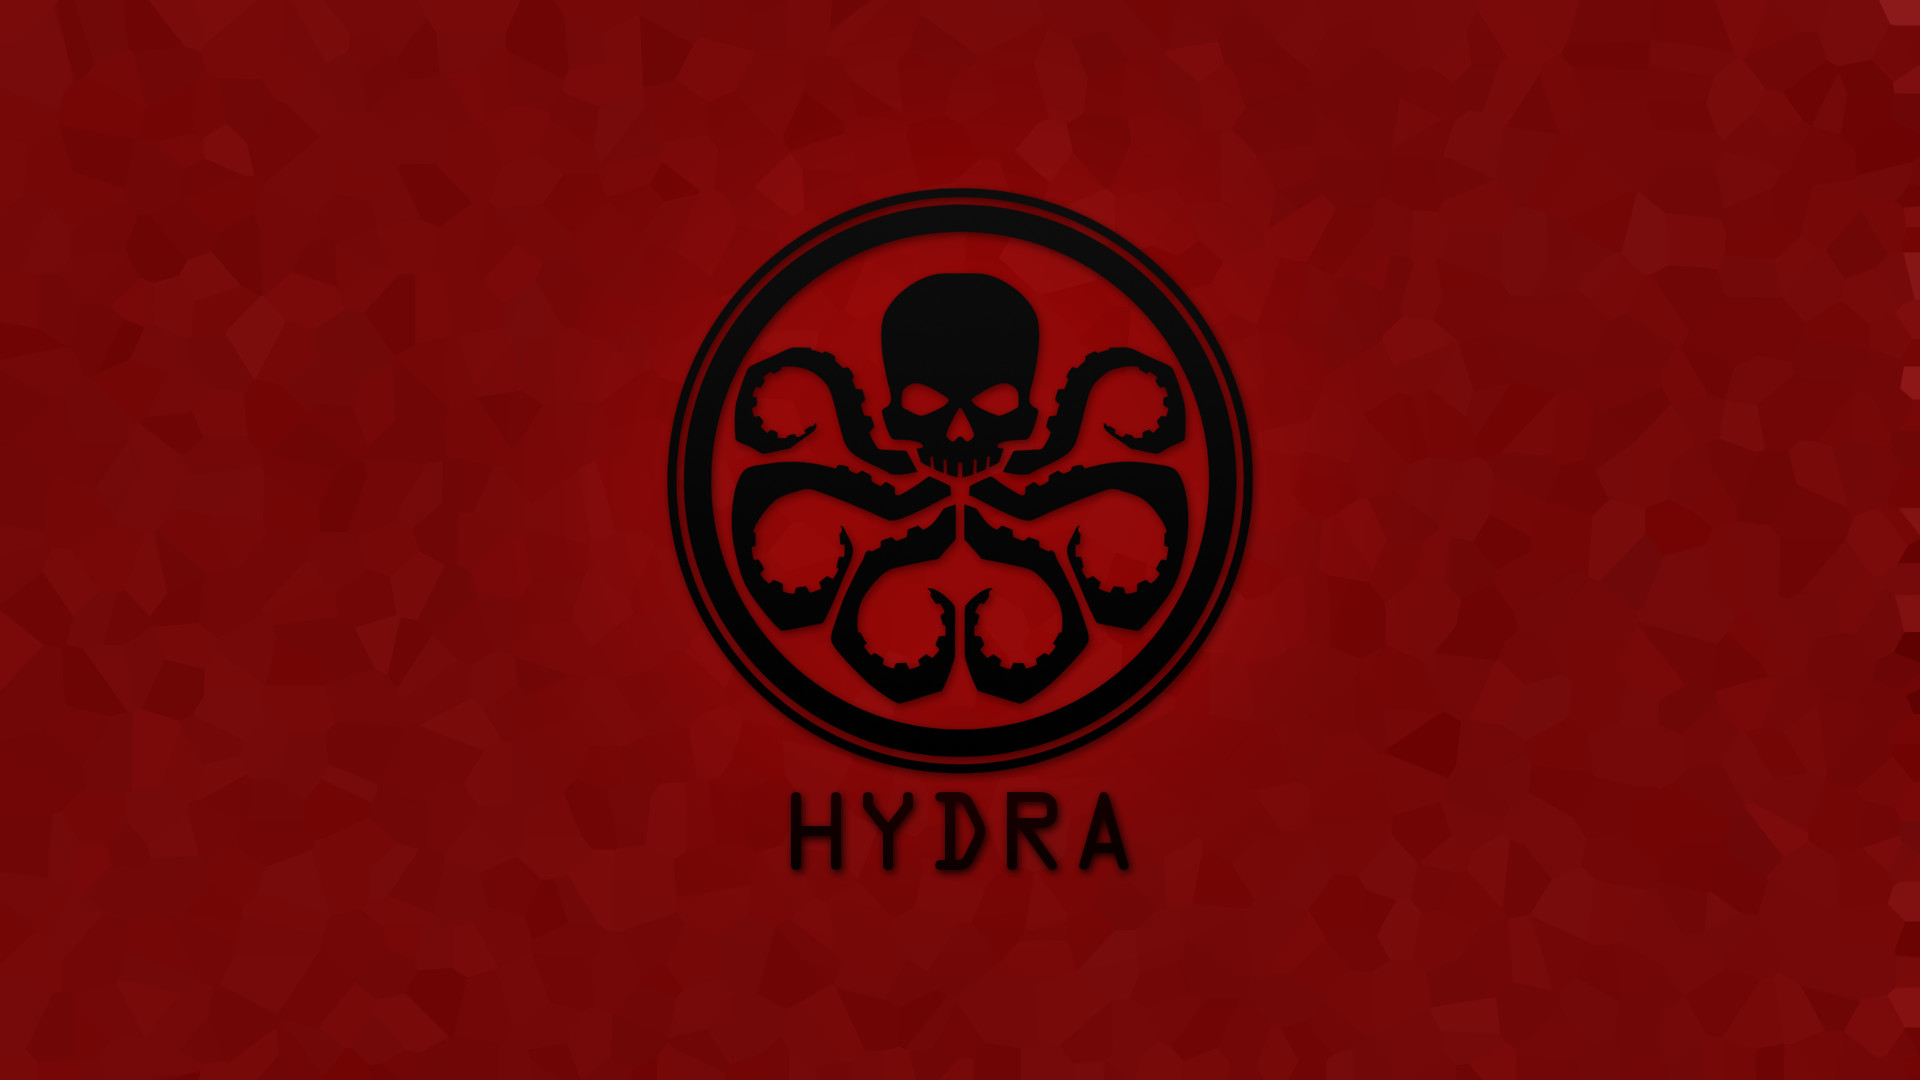 Wallpaper – Hydra by desous on DeviantArt